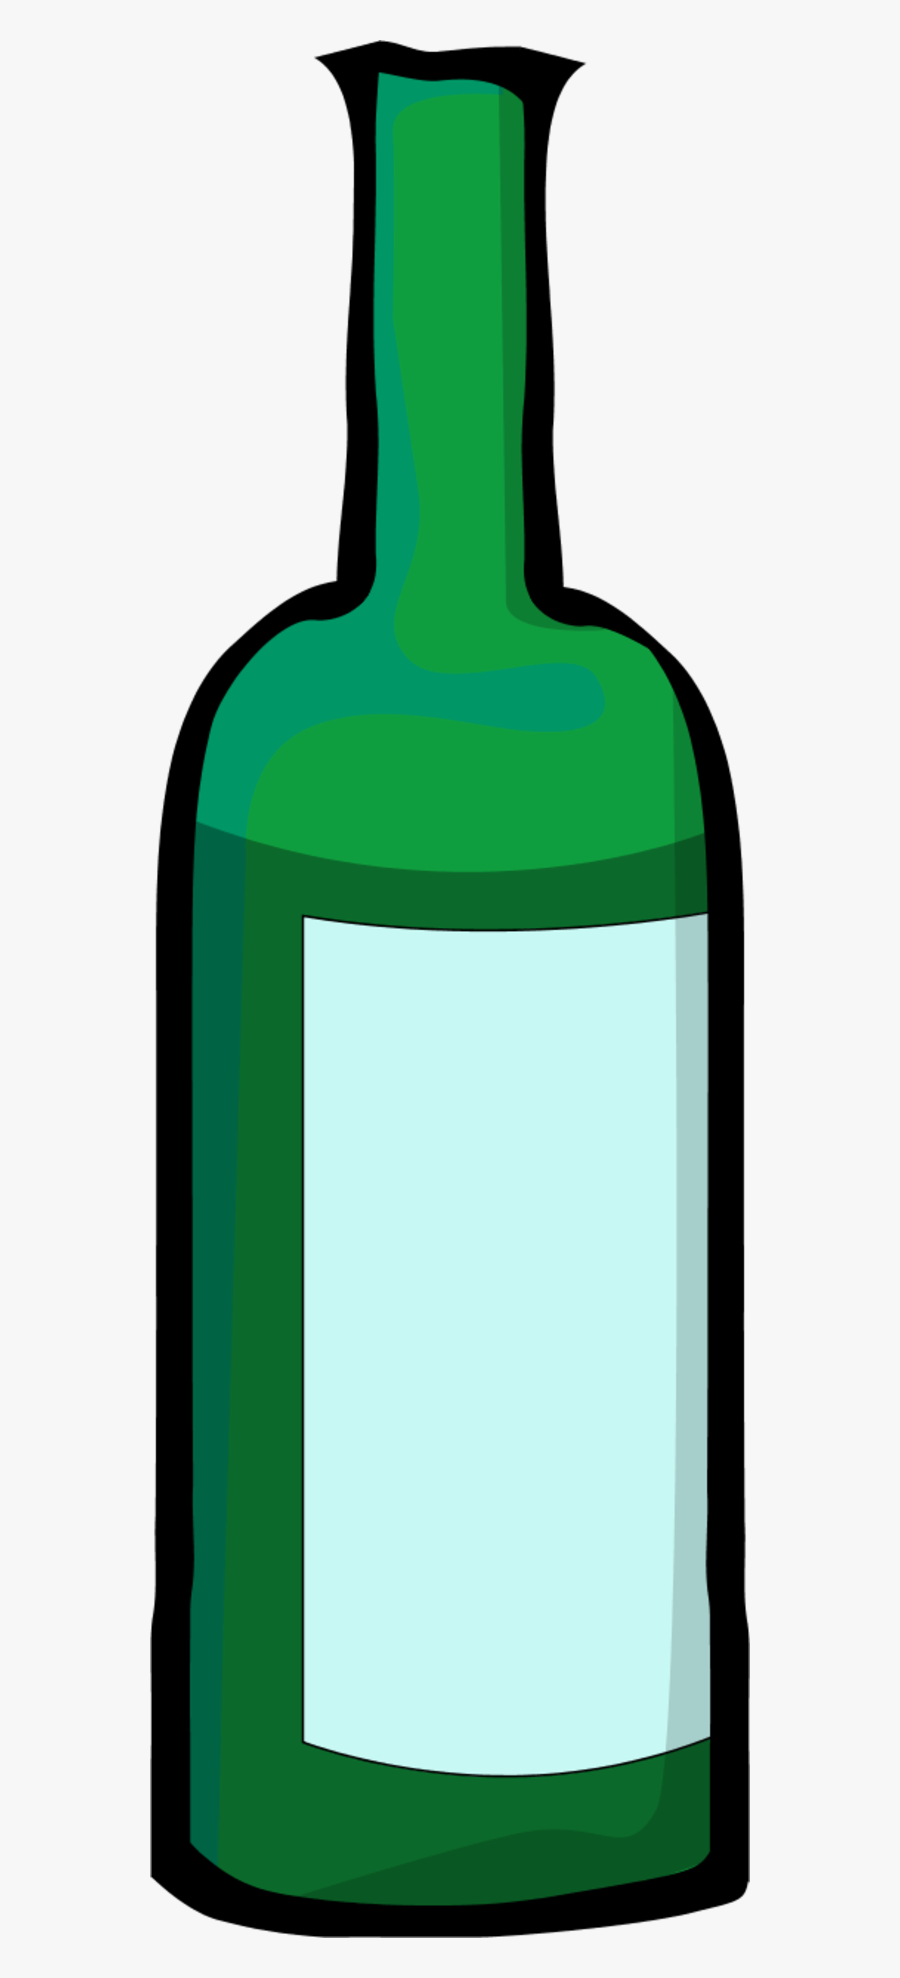 Bottle Clipart Green Bottle - Wine Bottle Clip Art, Transparent Clipart